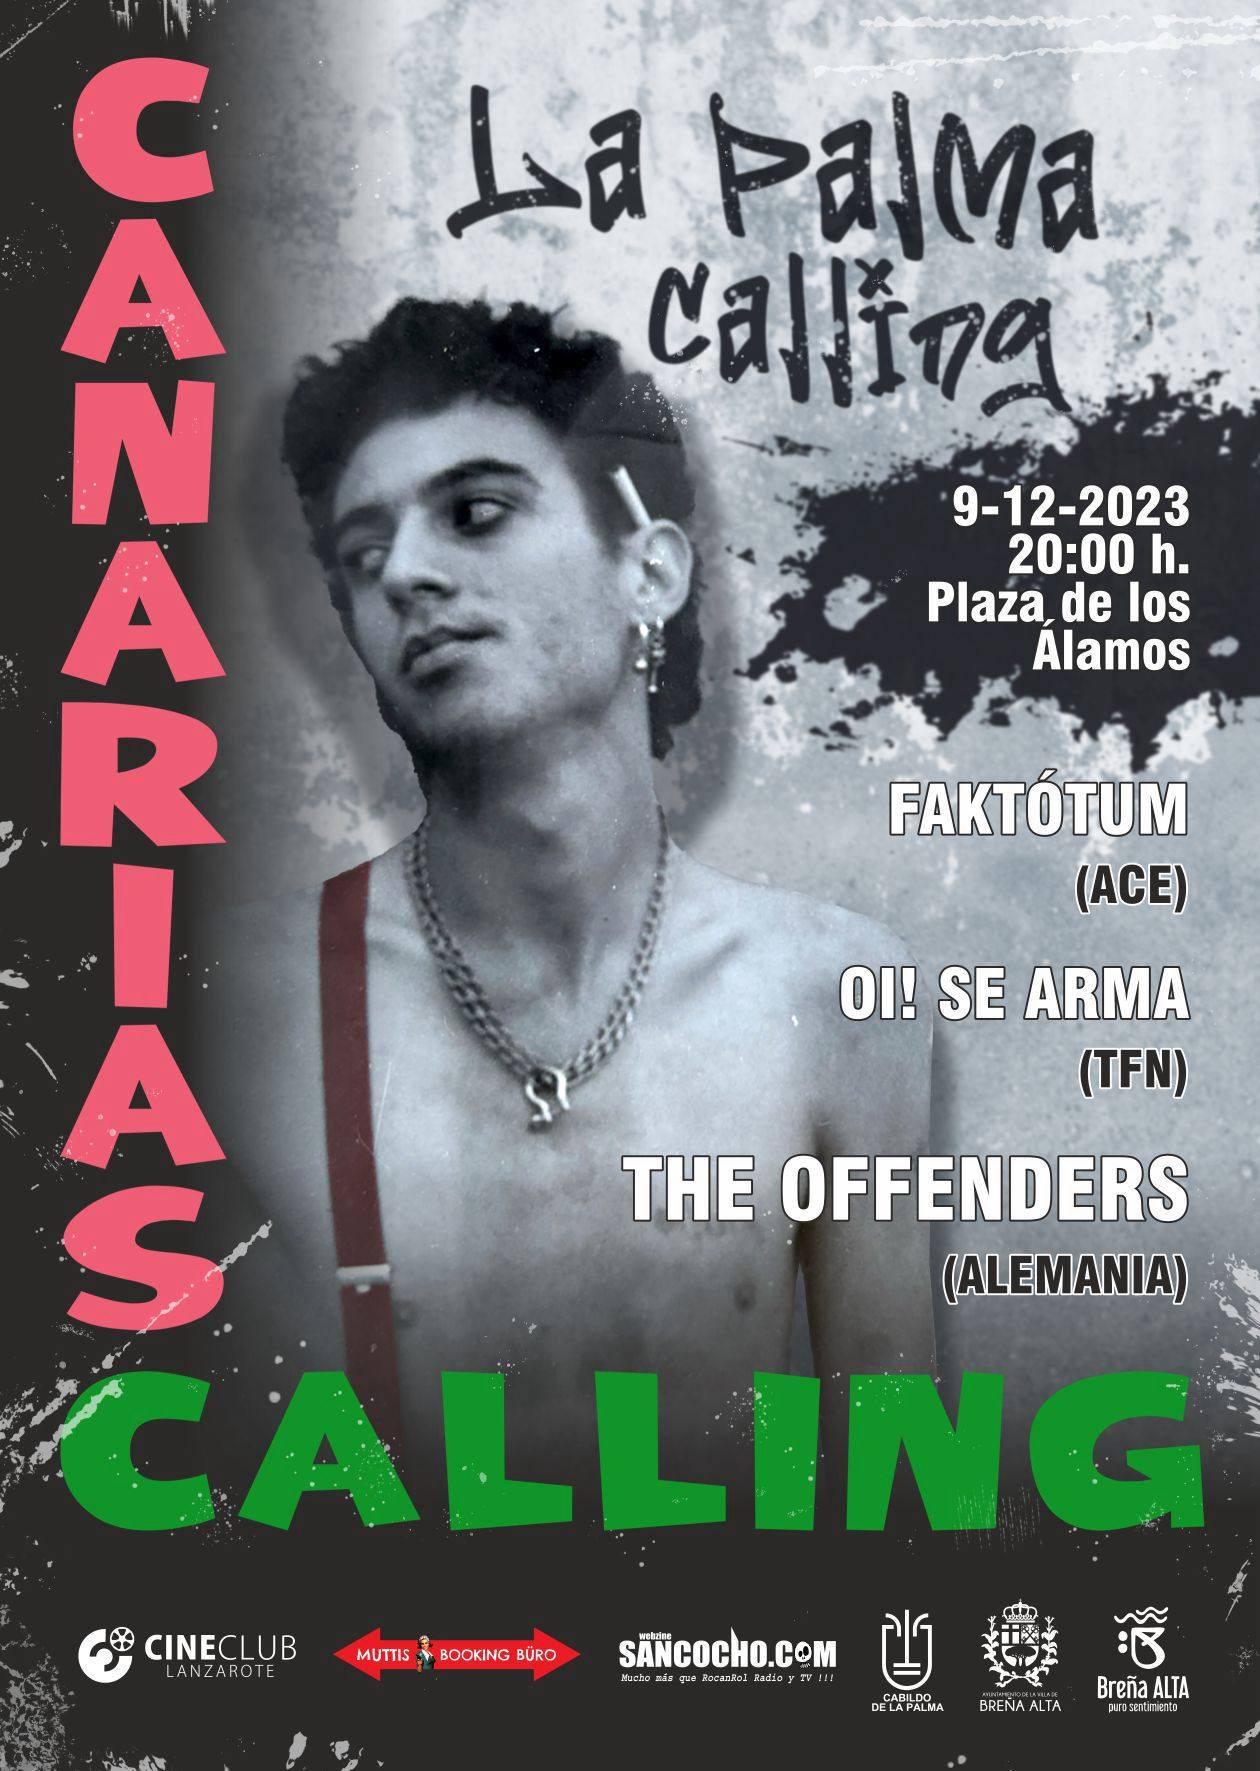 Canarias calling - La Palma